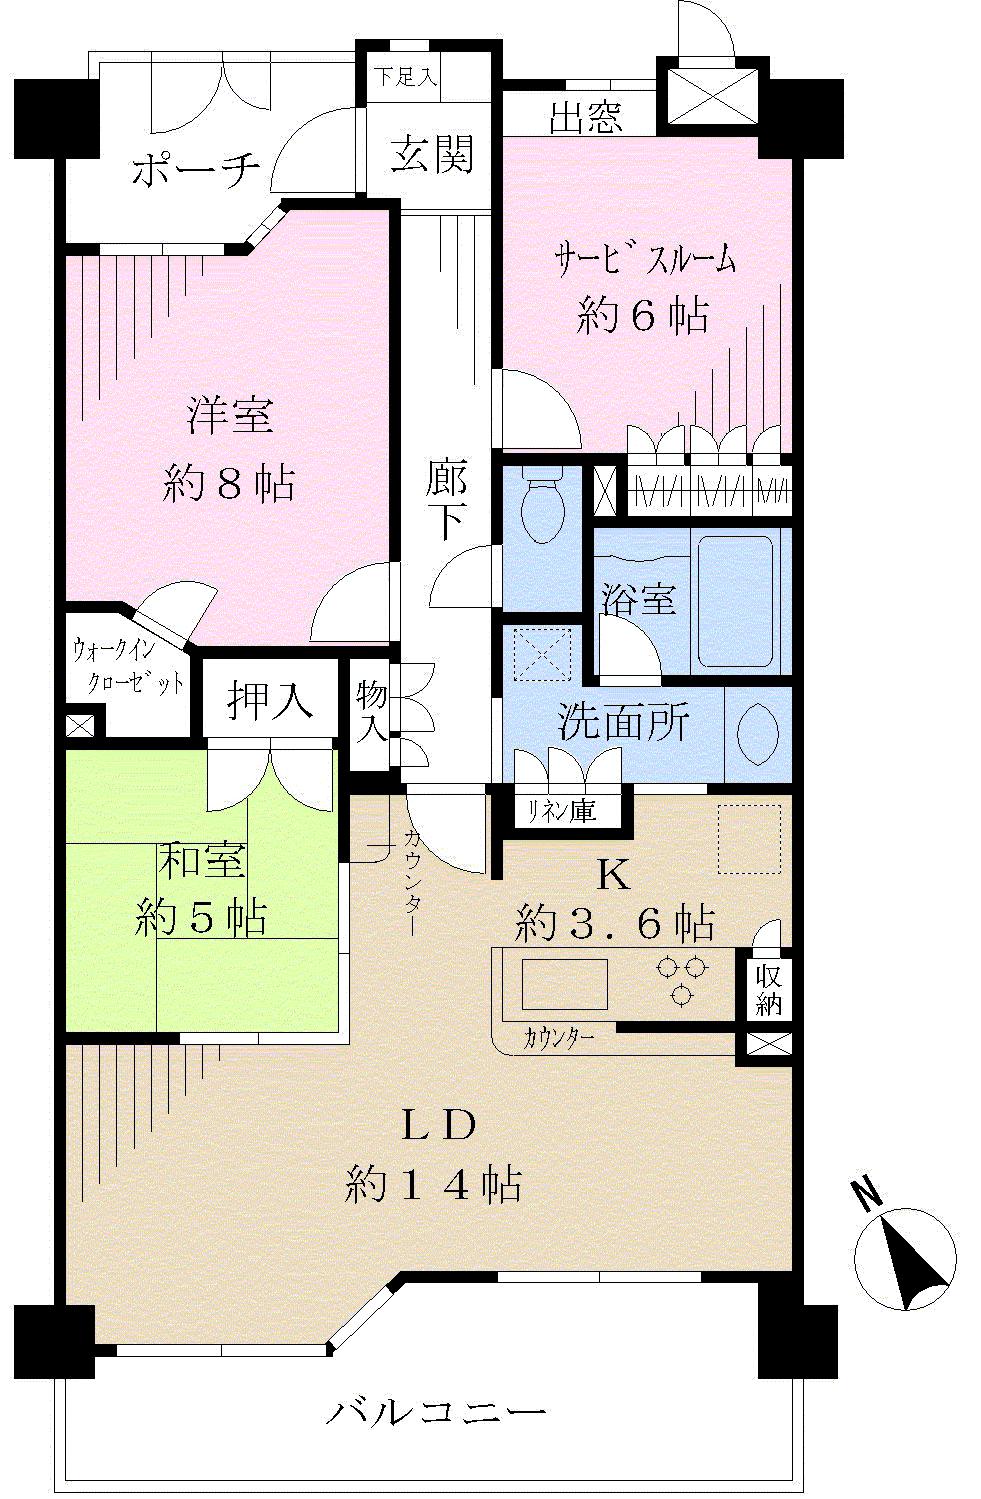 Floor plan. 2LDK + S (storeroom), Price 23.8 million yen, Occupied area 81.44 sq m , Balcony area 11.89 sq m